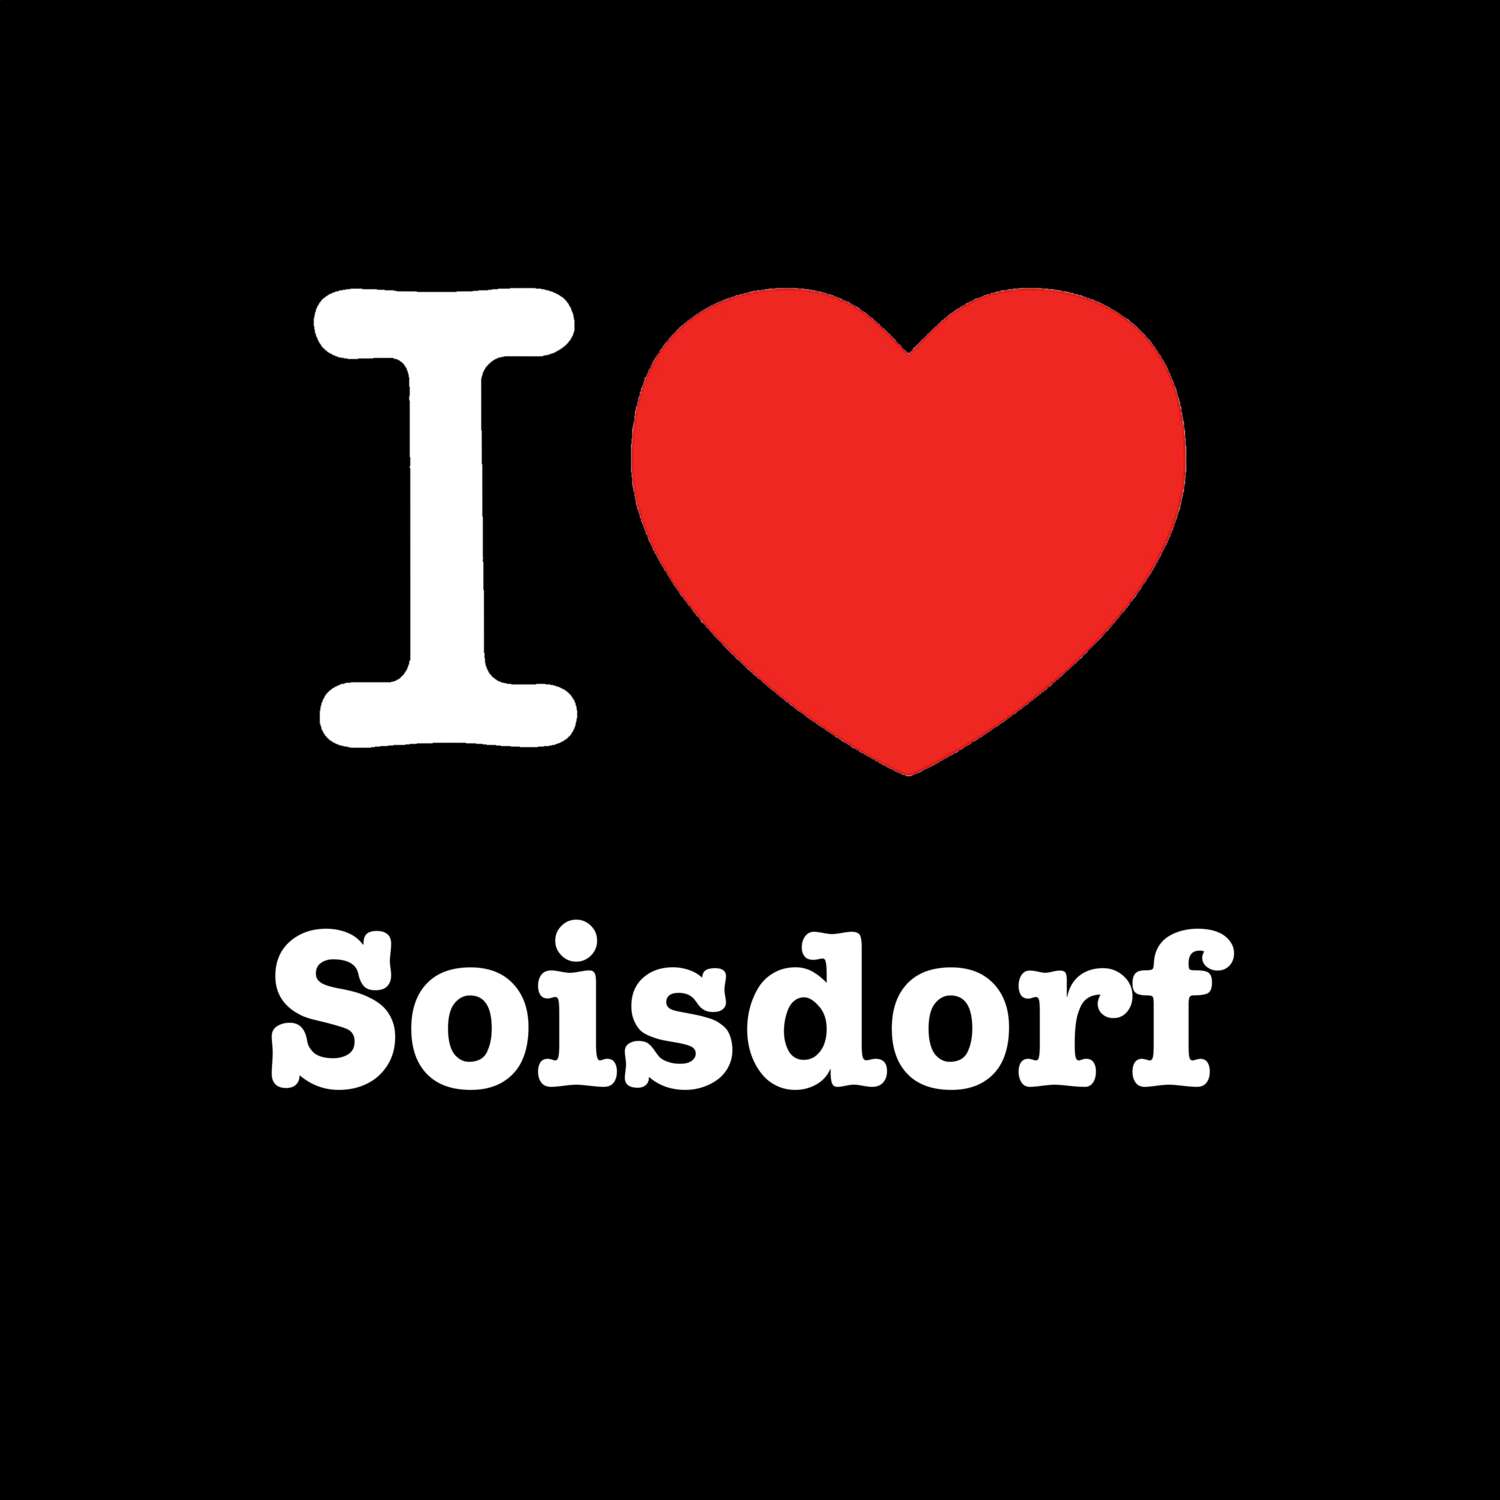 Soisdorf T-Shirt »I love«